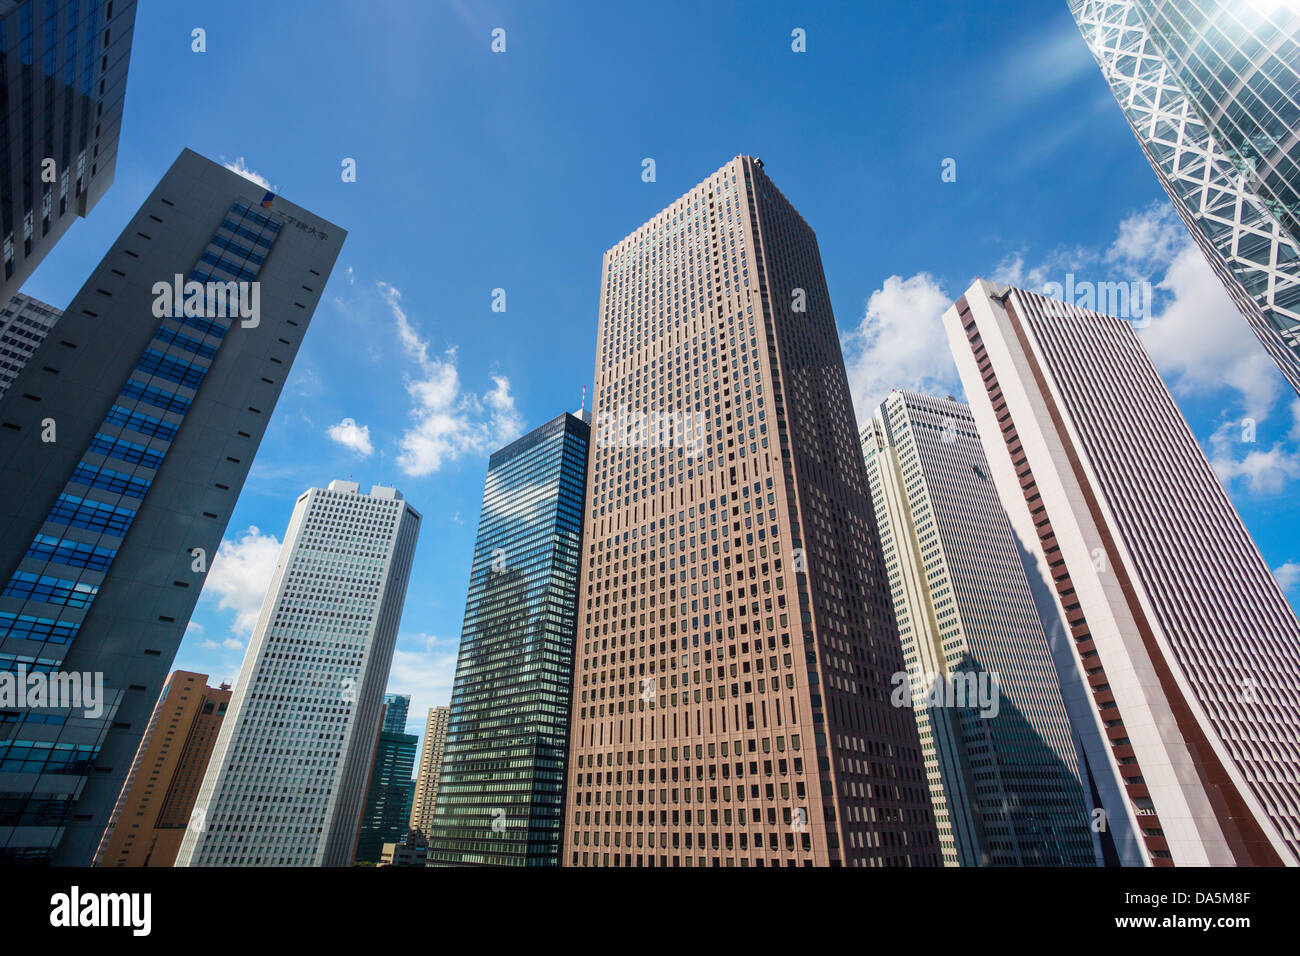 Japan, Asia, Tokyo, City, Shinjuku, District, west side, architecture, building, new, skyline, skyscraper, Stock Photo